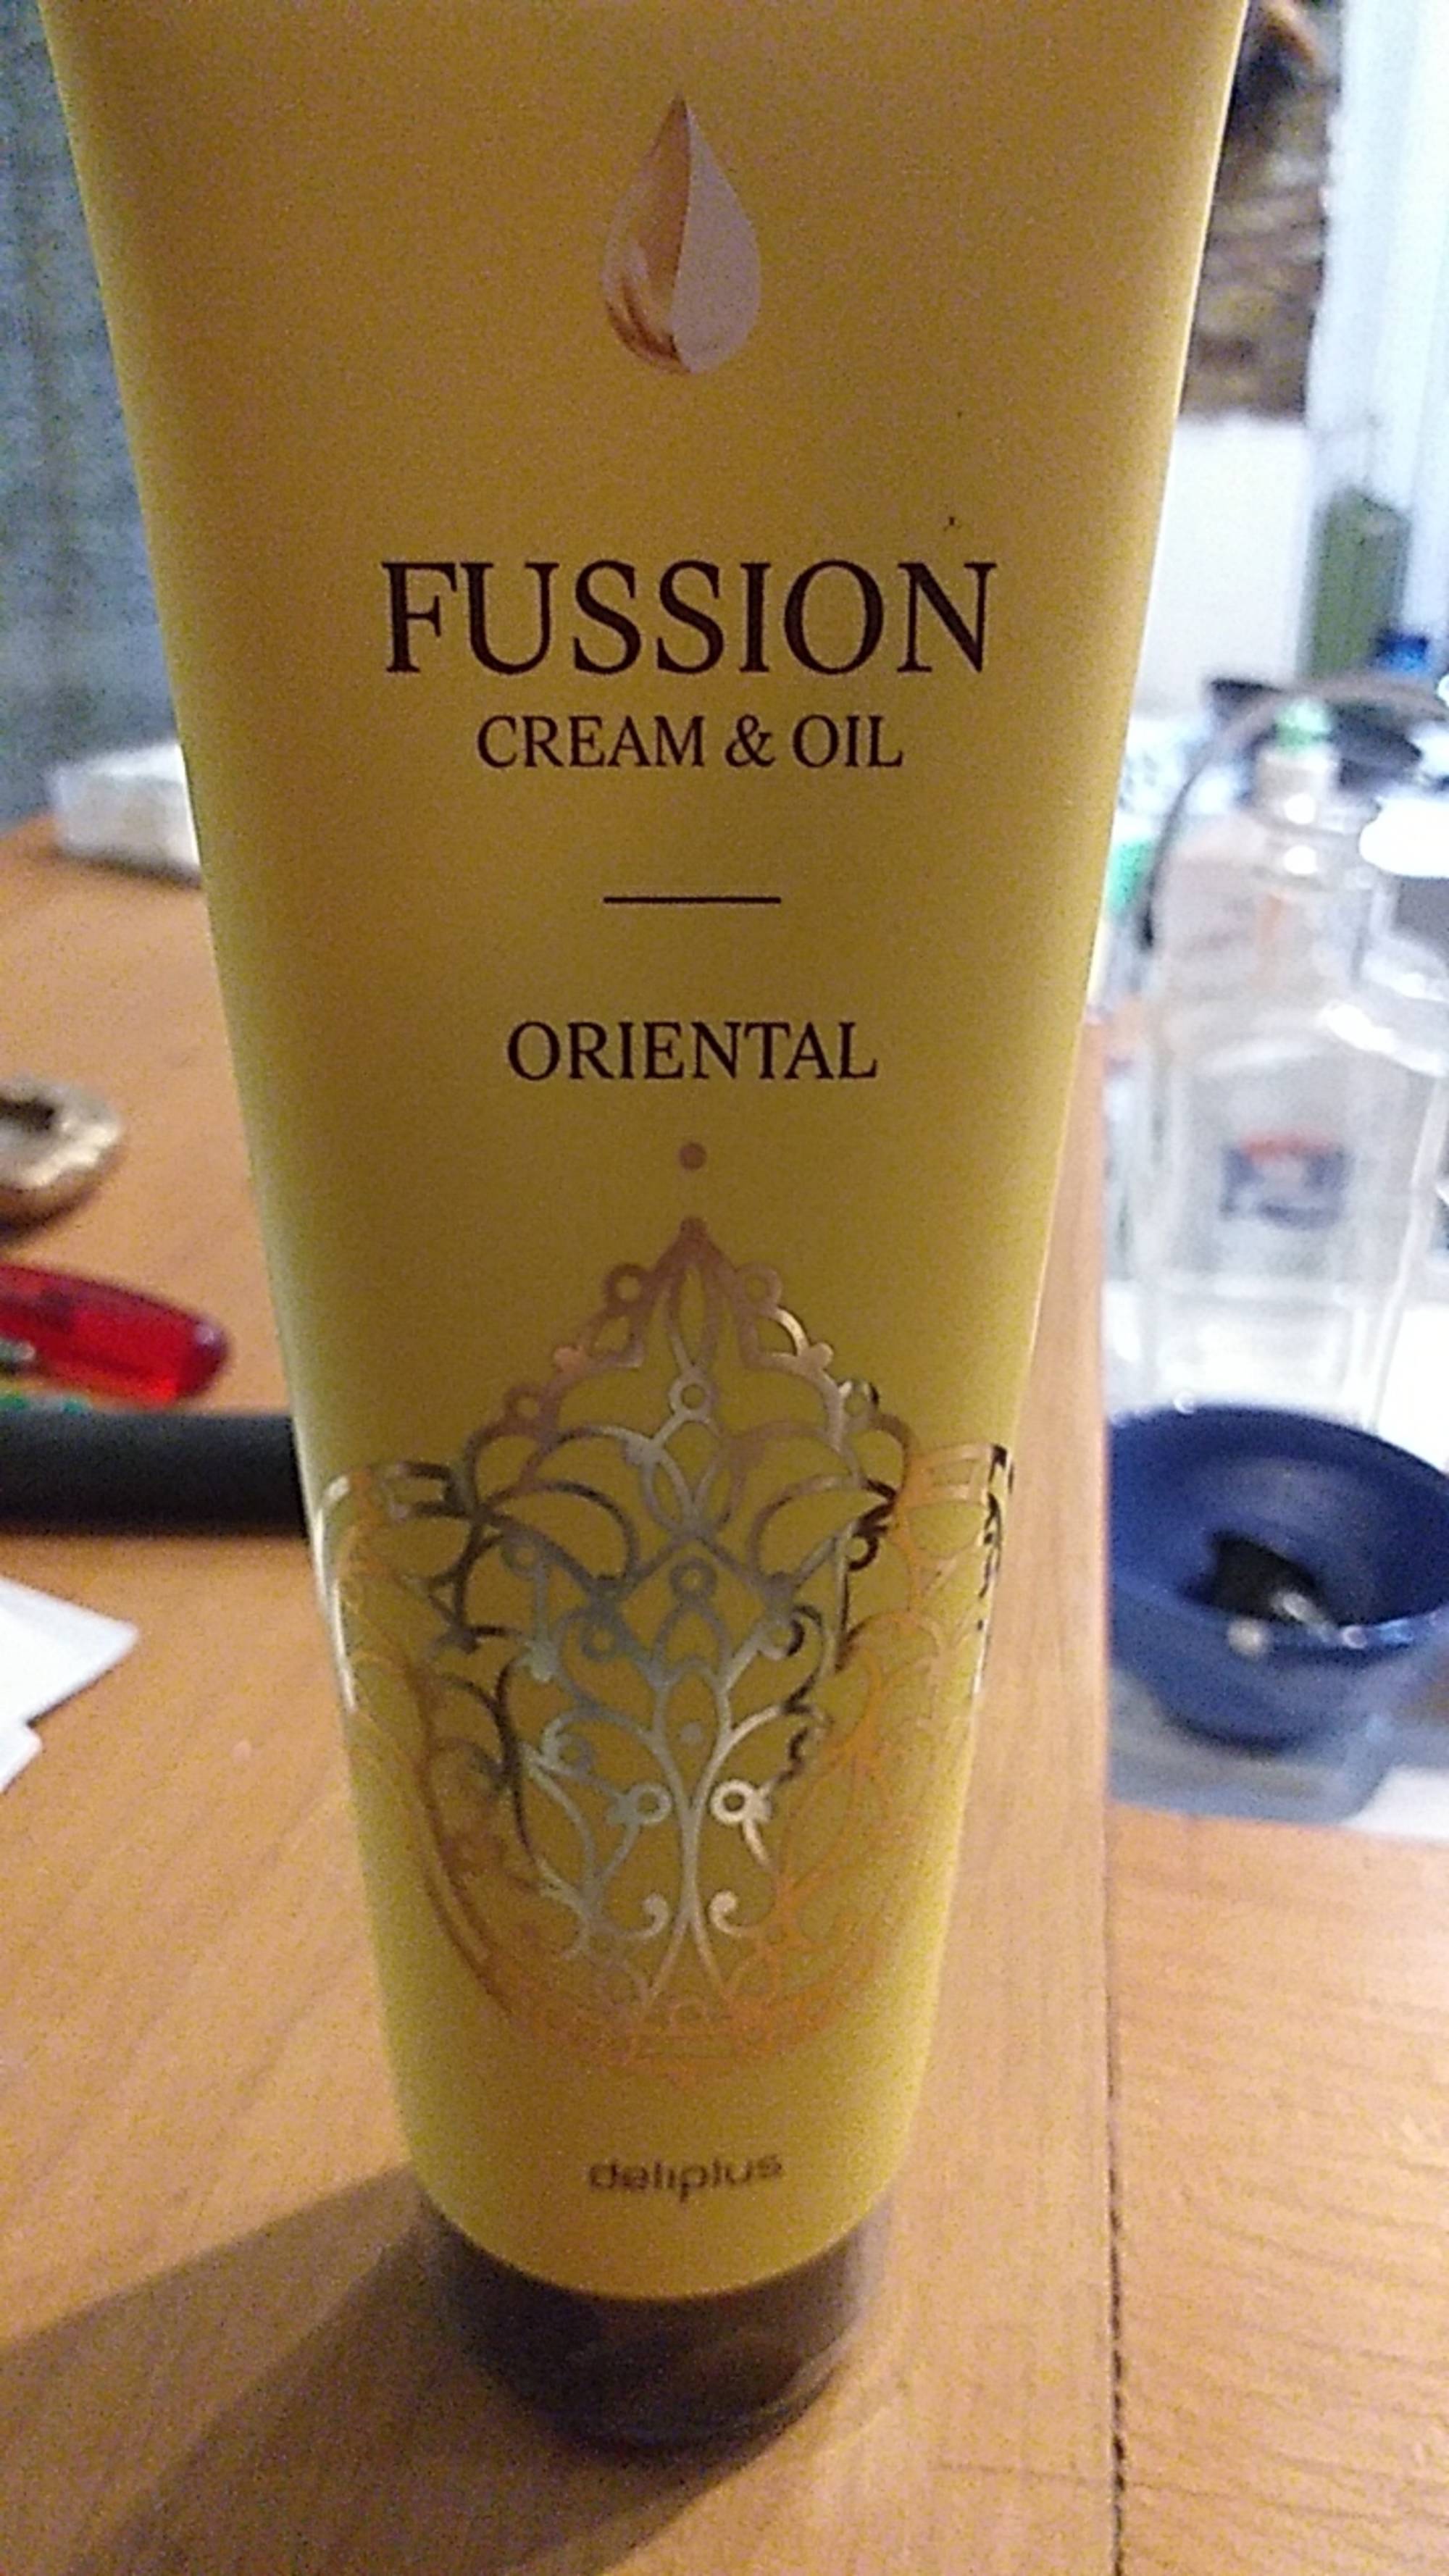 DELIPLUS - Oriental - Fussion cream & oil